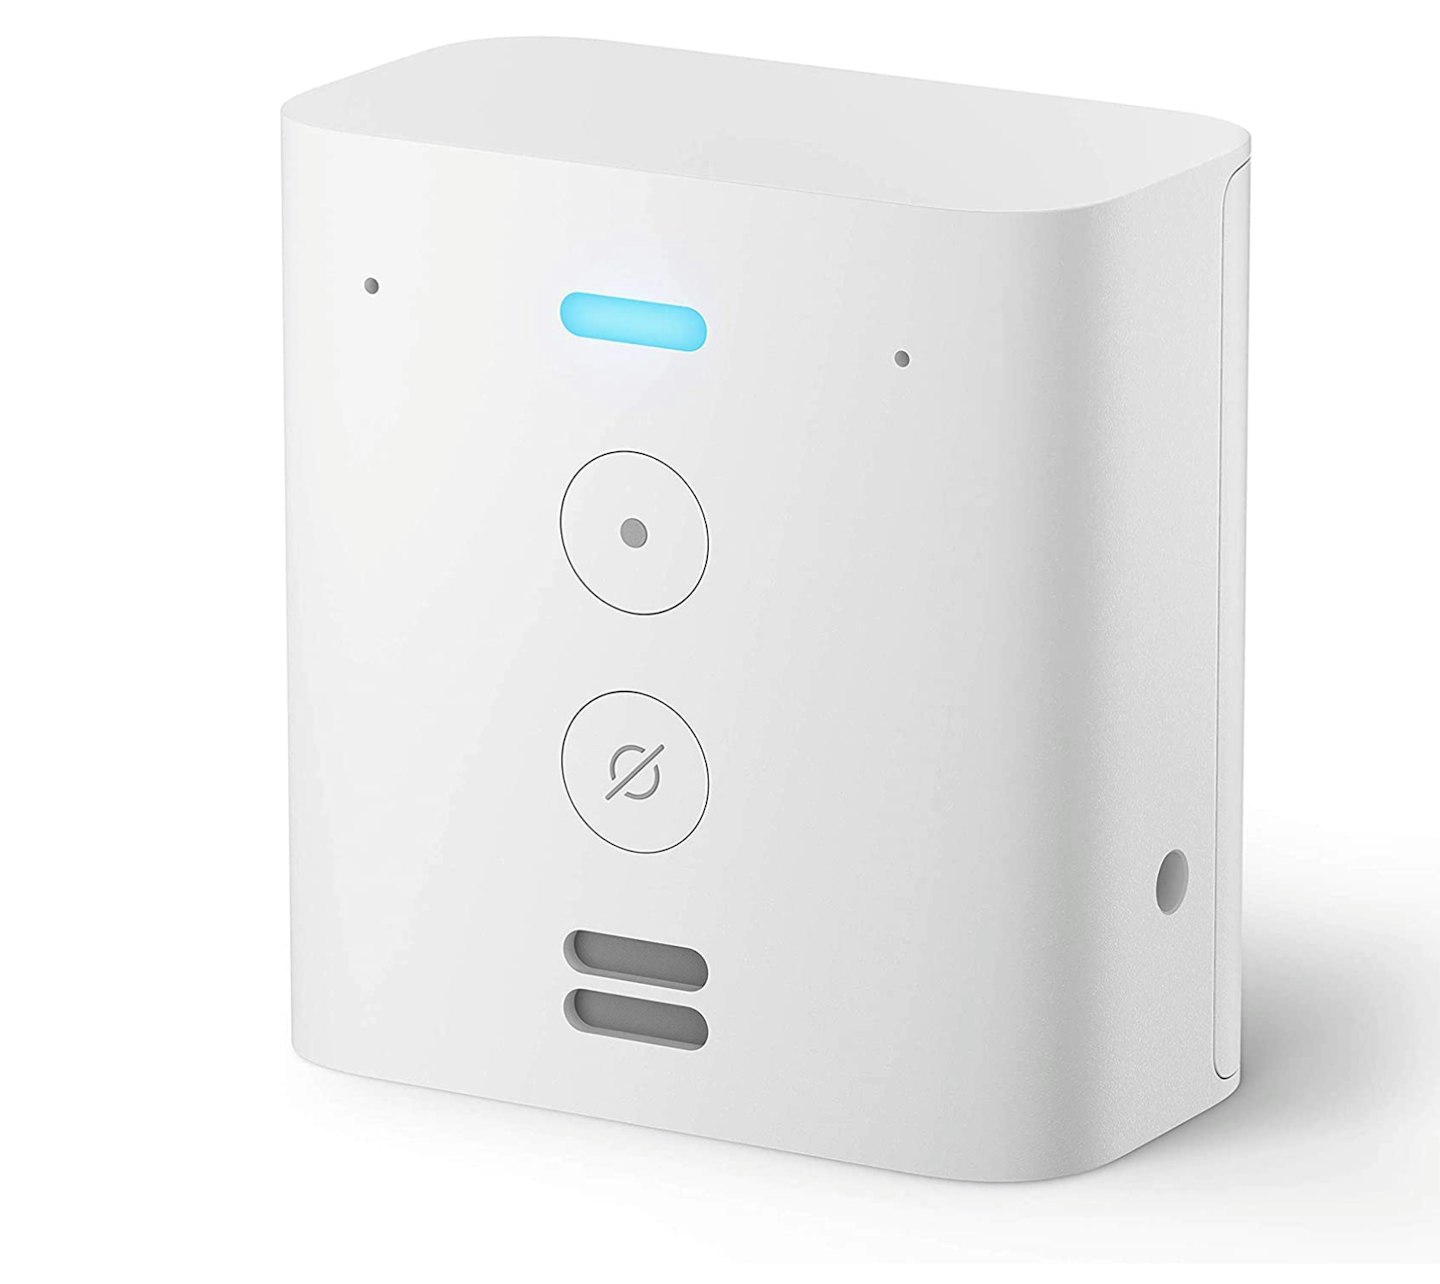 Echo Flex u2013 Voice control smart home devices with Alexa